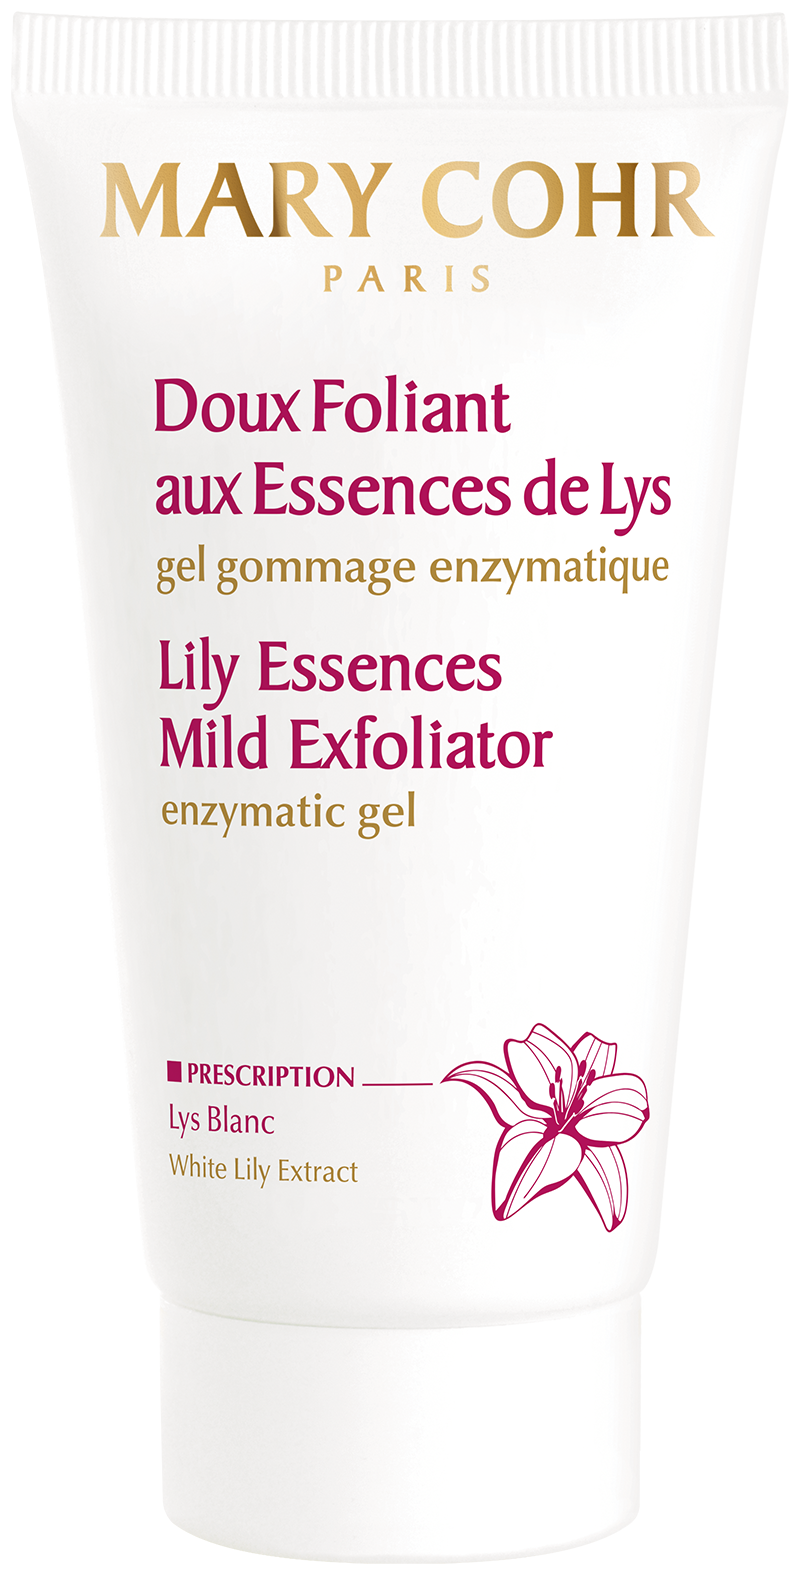 Lilly Essences Mild Exfoliator